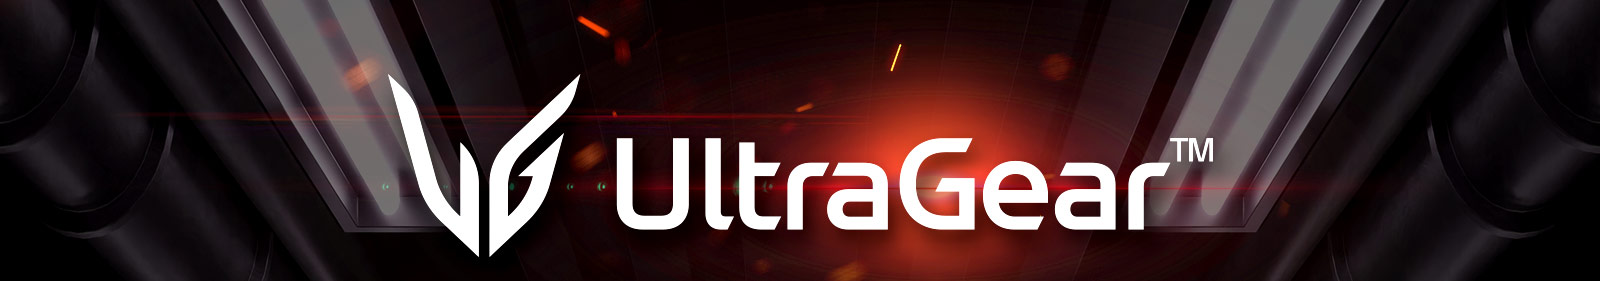 mnt-ultragear-32gn50r-01-1-lg-ultragear-desktop